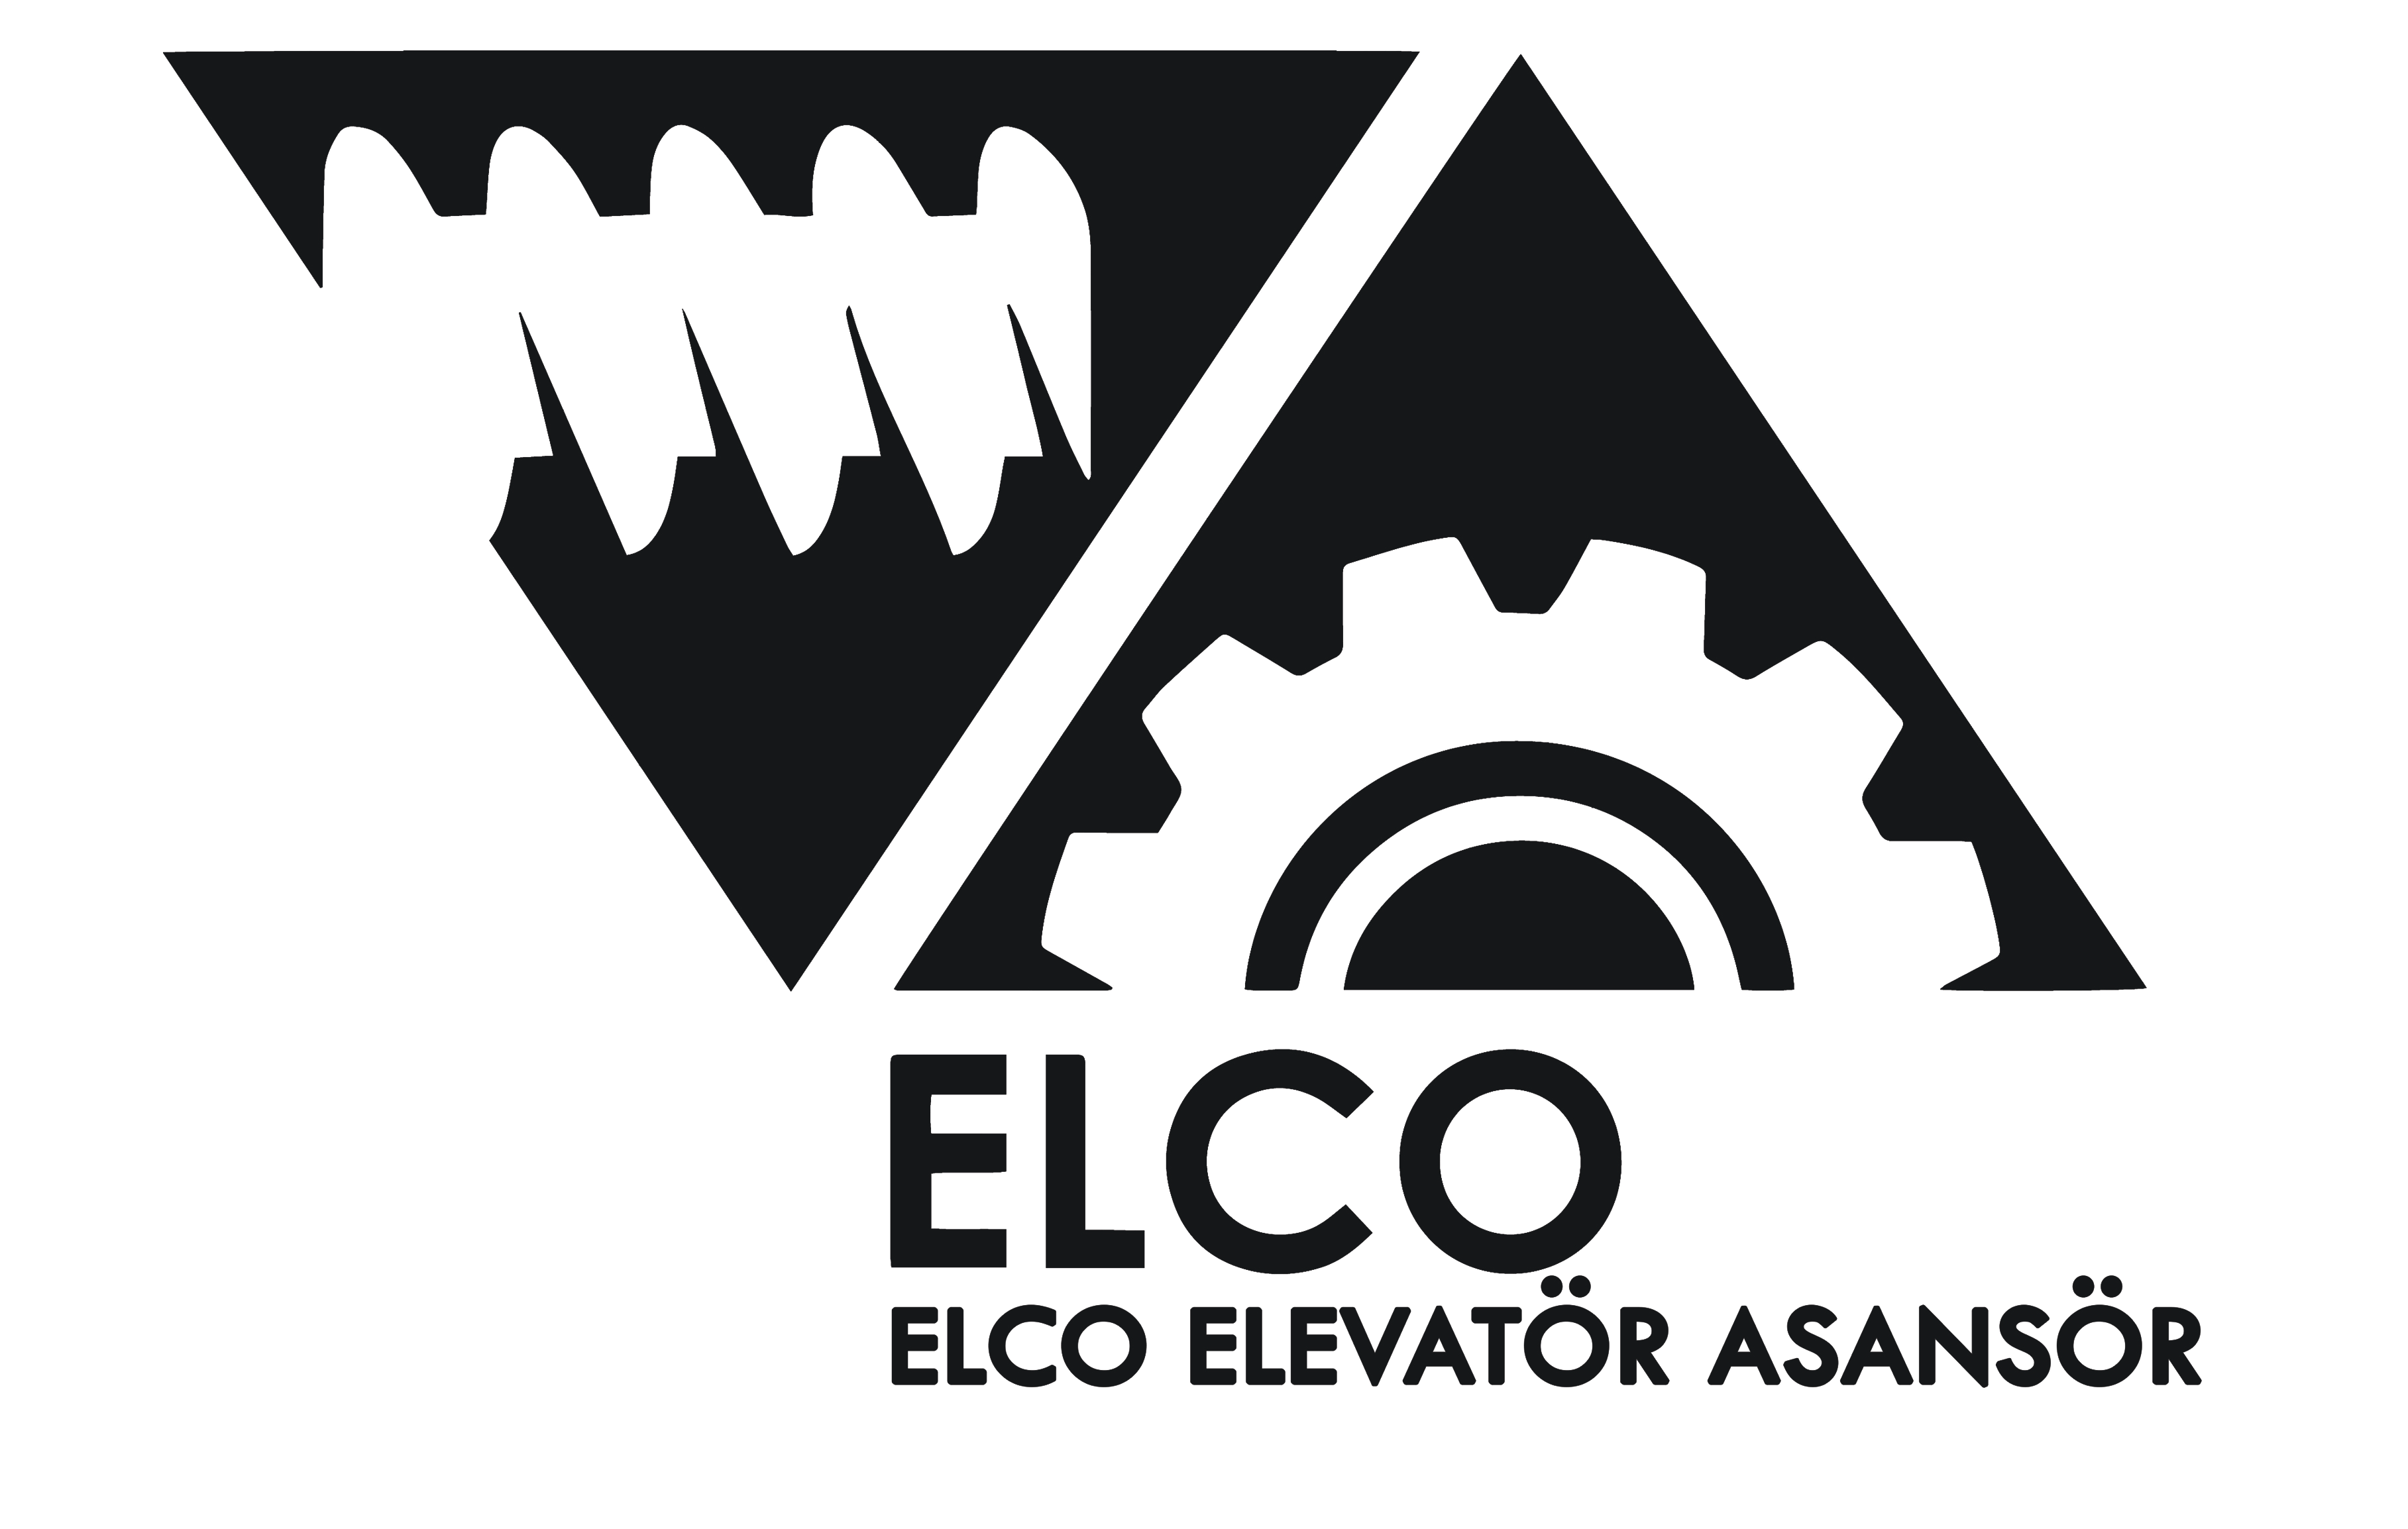 ELCO ELEVATOR ASANSOR